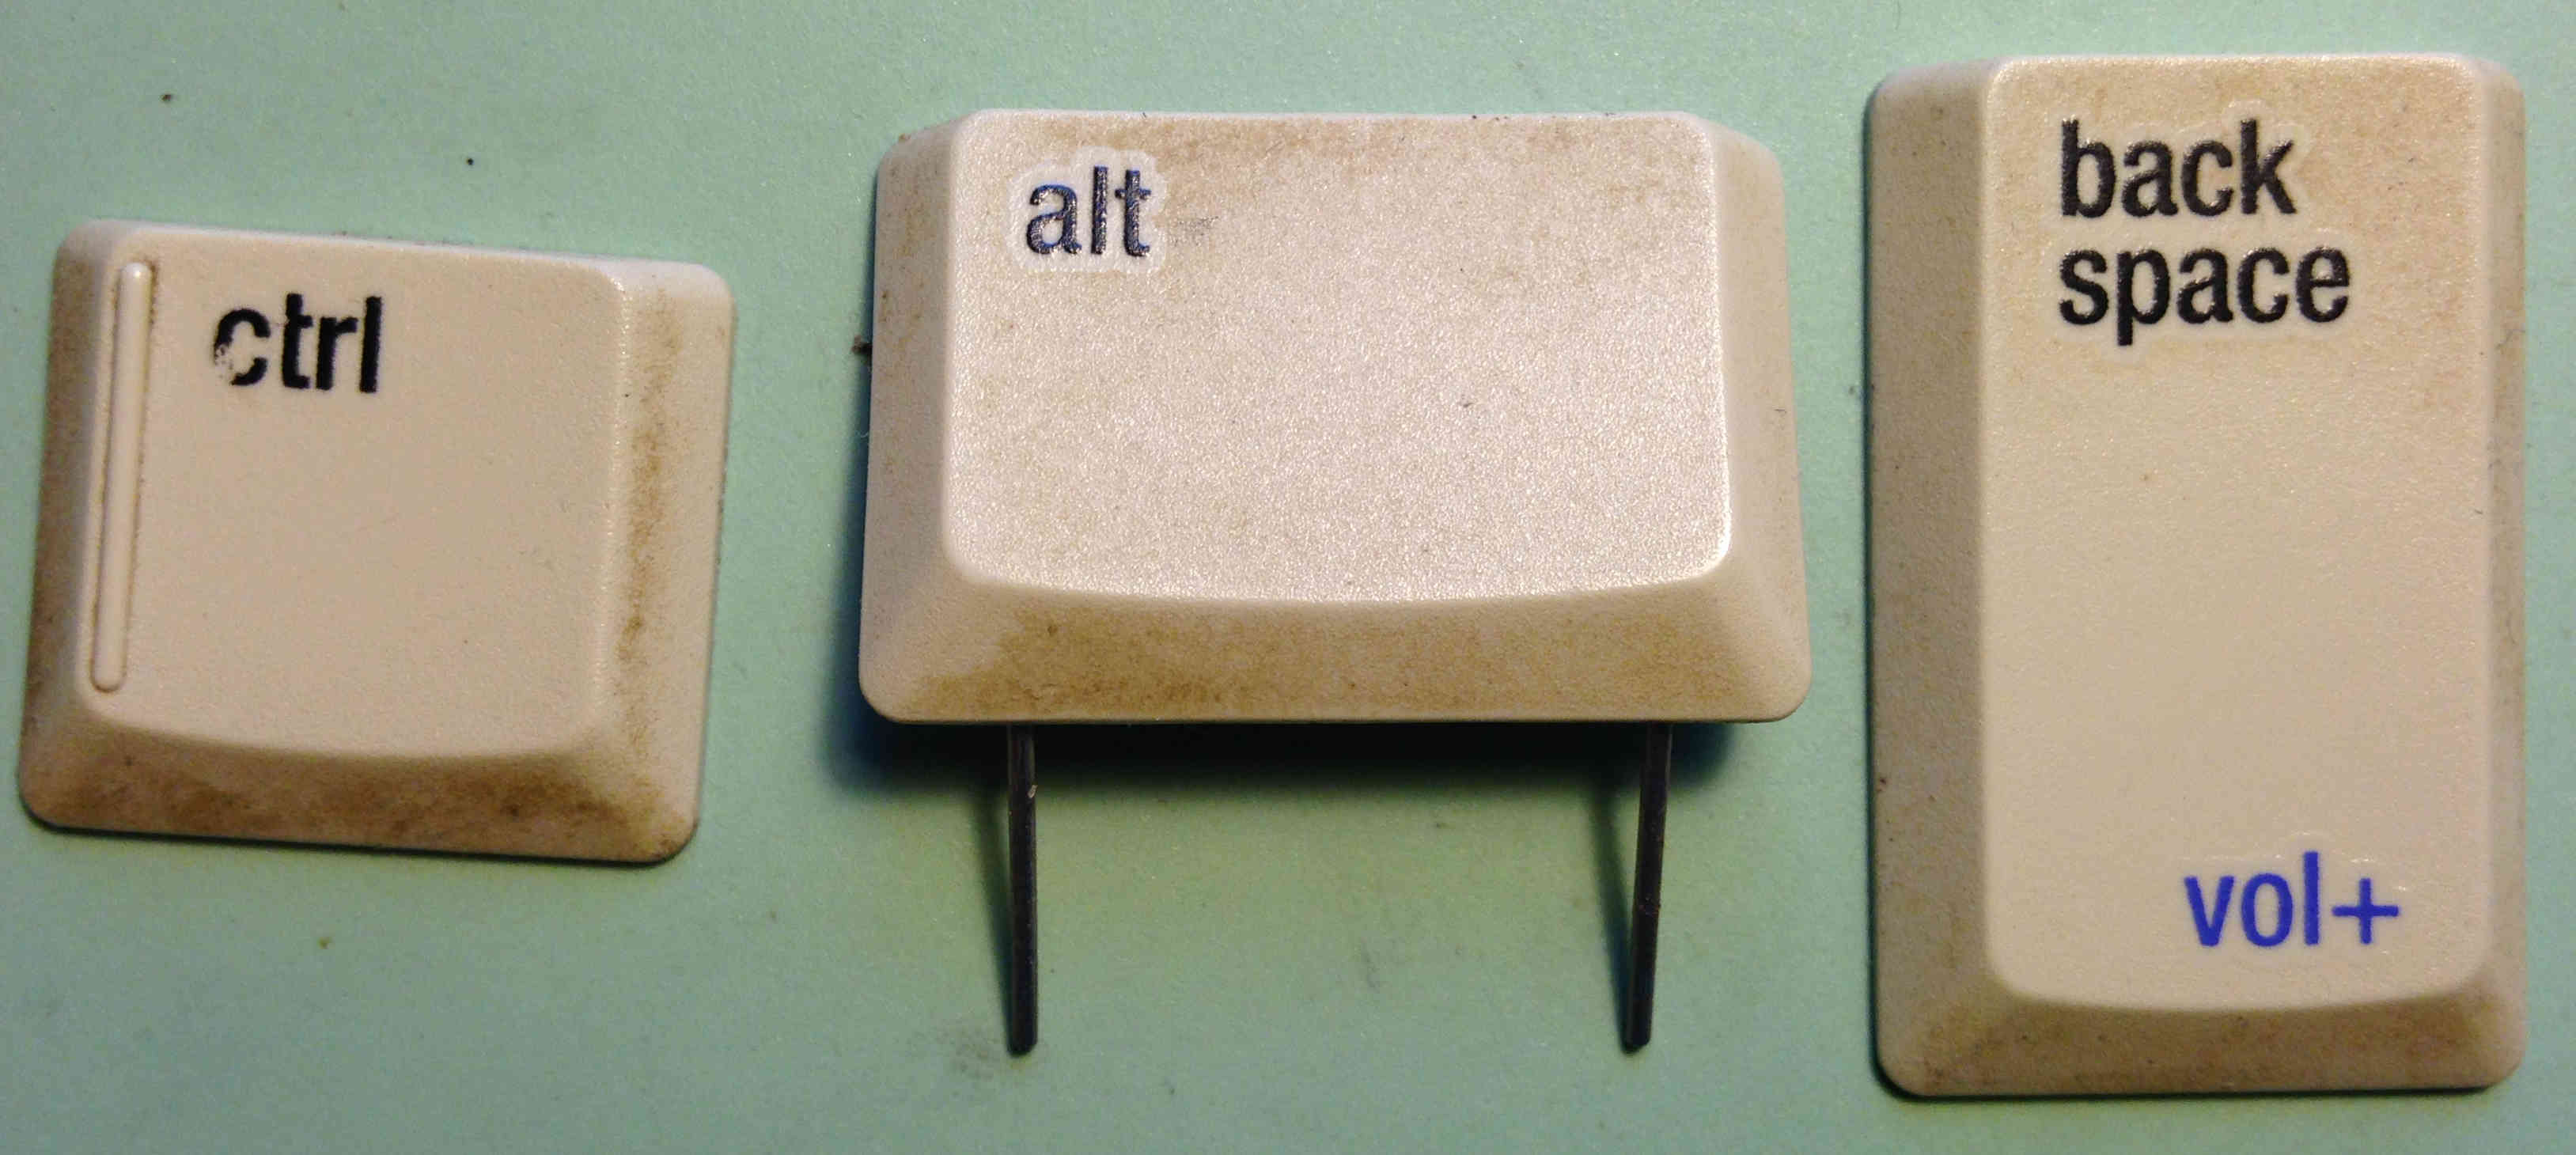 Keys arranged to show Ctrl-Alt-Backspace.